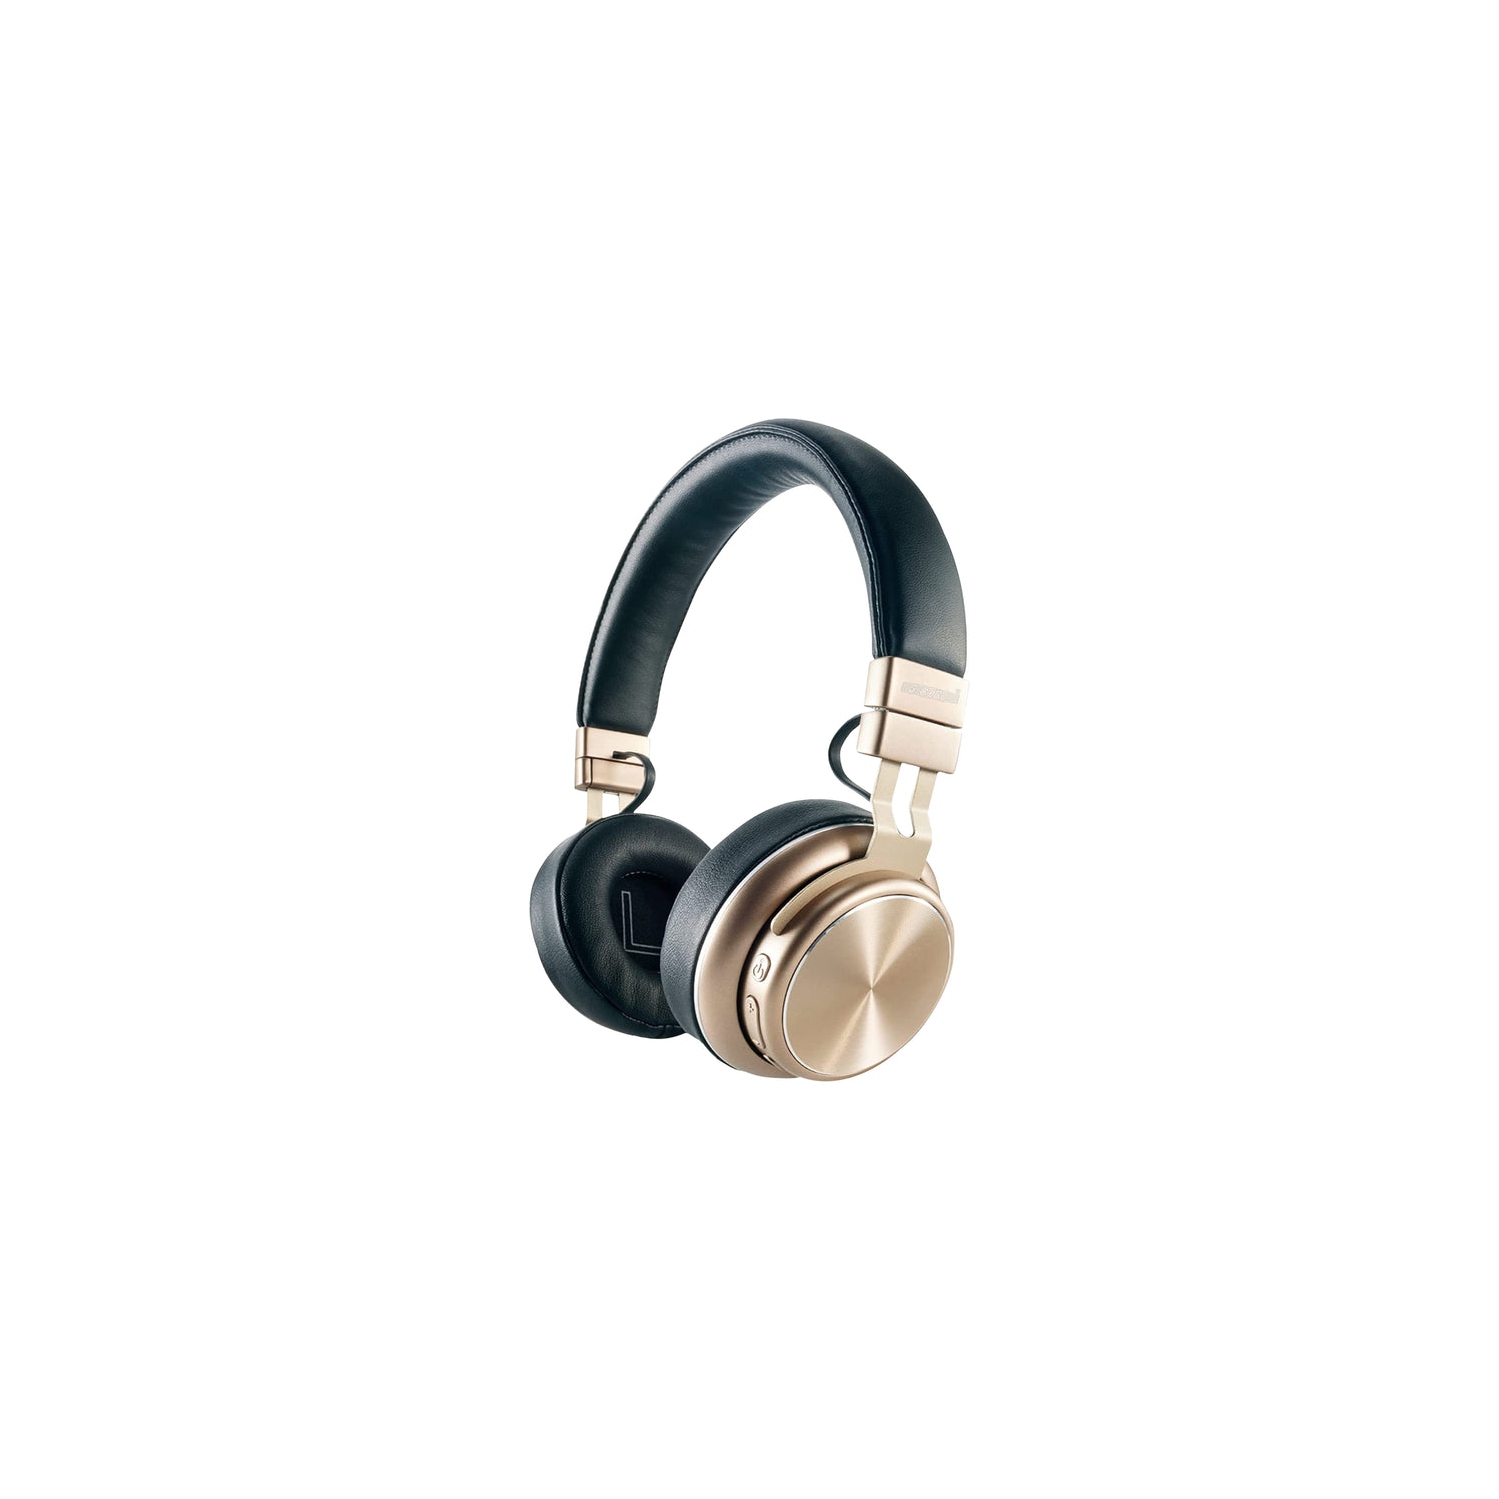 5 Core Bluetooth Headphones Gold Color| Premium Over Ear Bluetooth Headset| HiFi Stereo Foldable Lightweight Headset, Deep Bass | Headphones for Travel Smartphone Computer Laptop